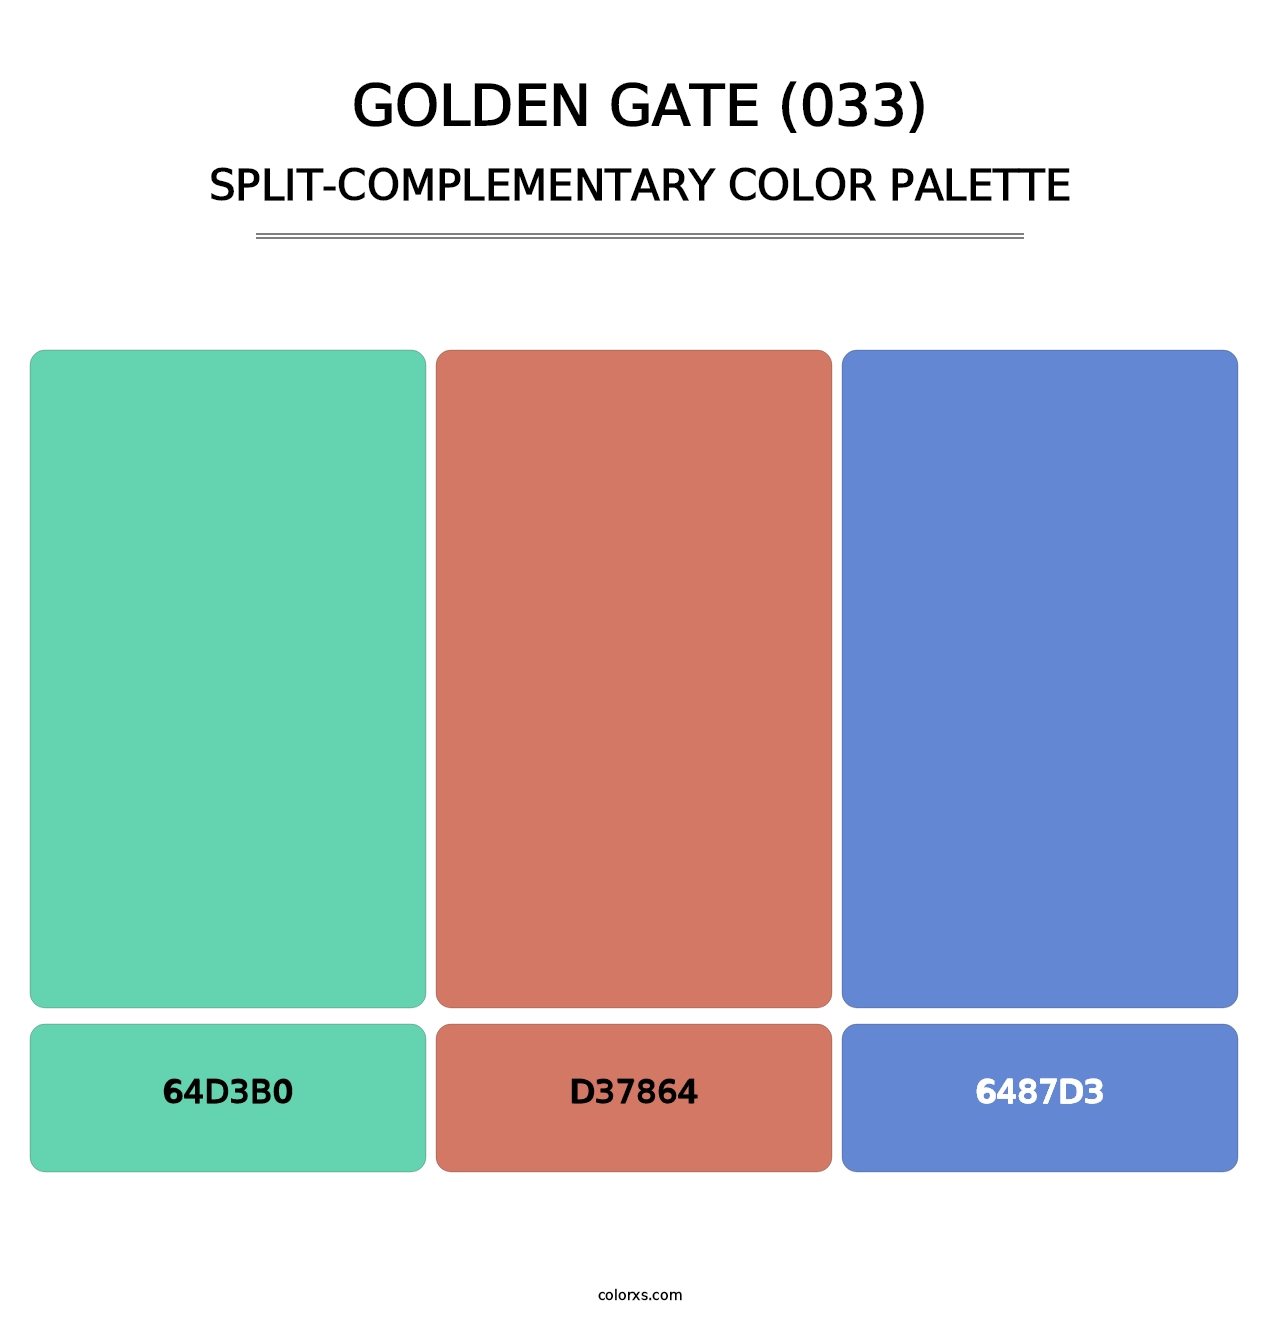 Golden Gate (033) - Split-Complementary Color Palette